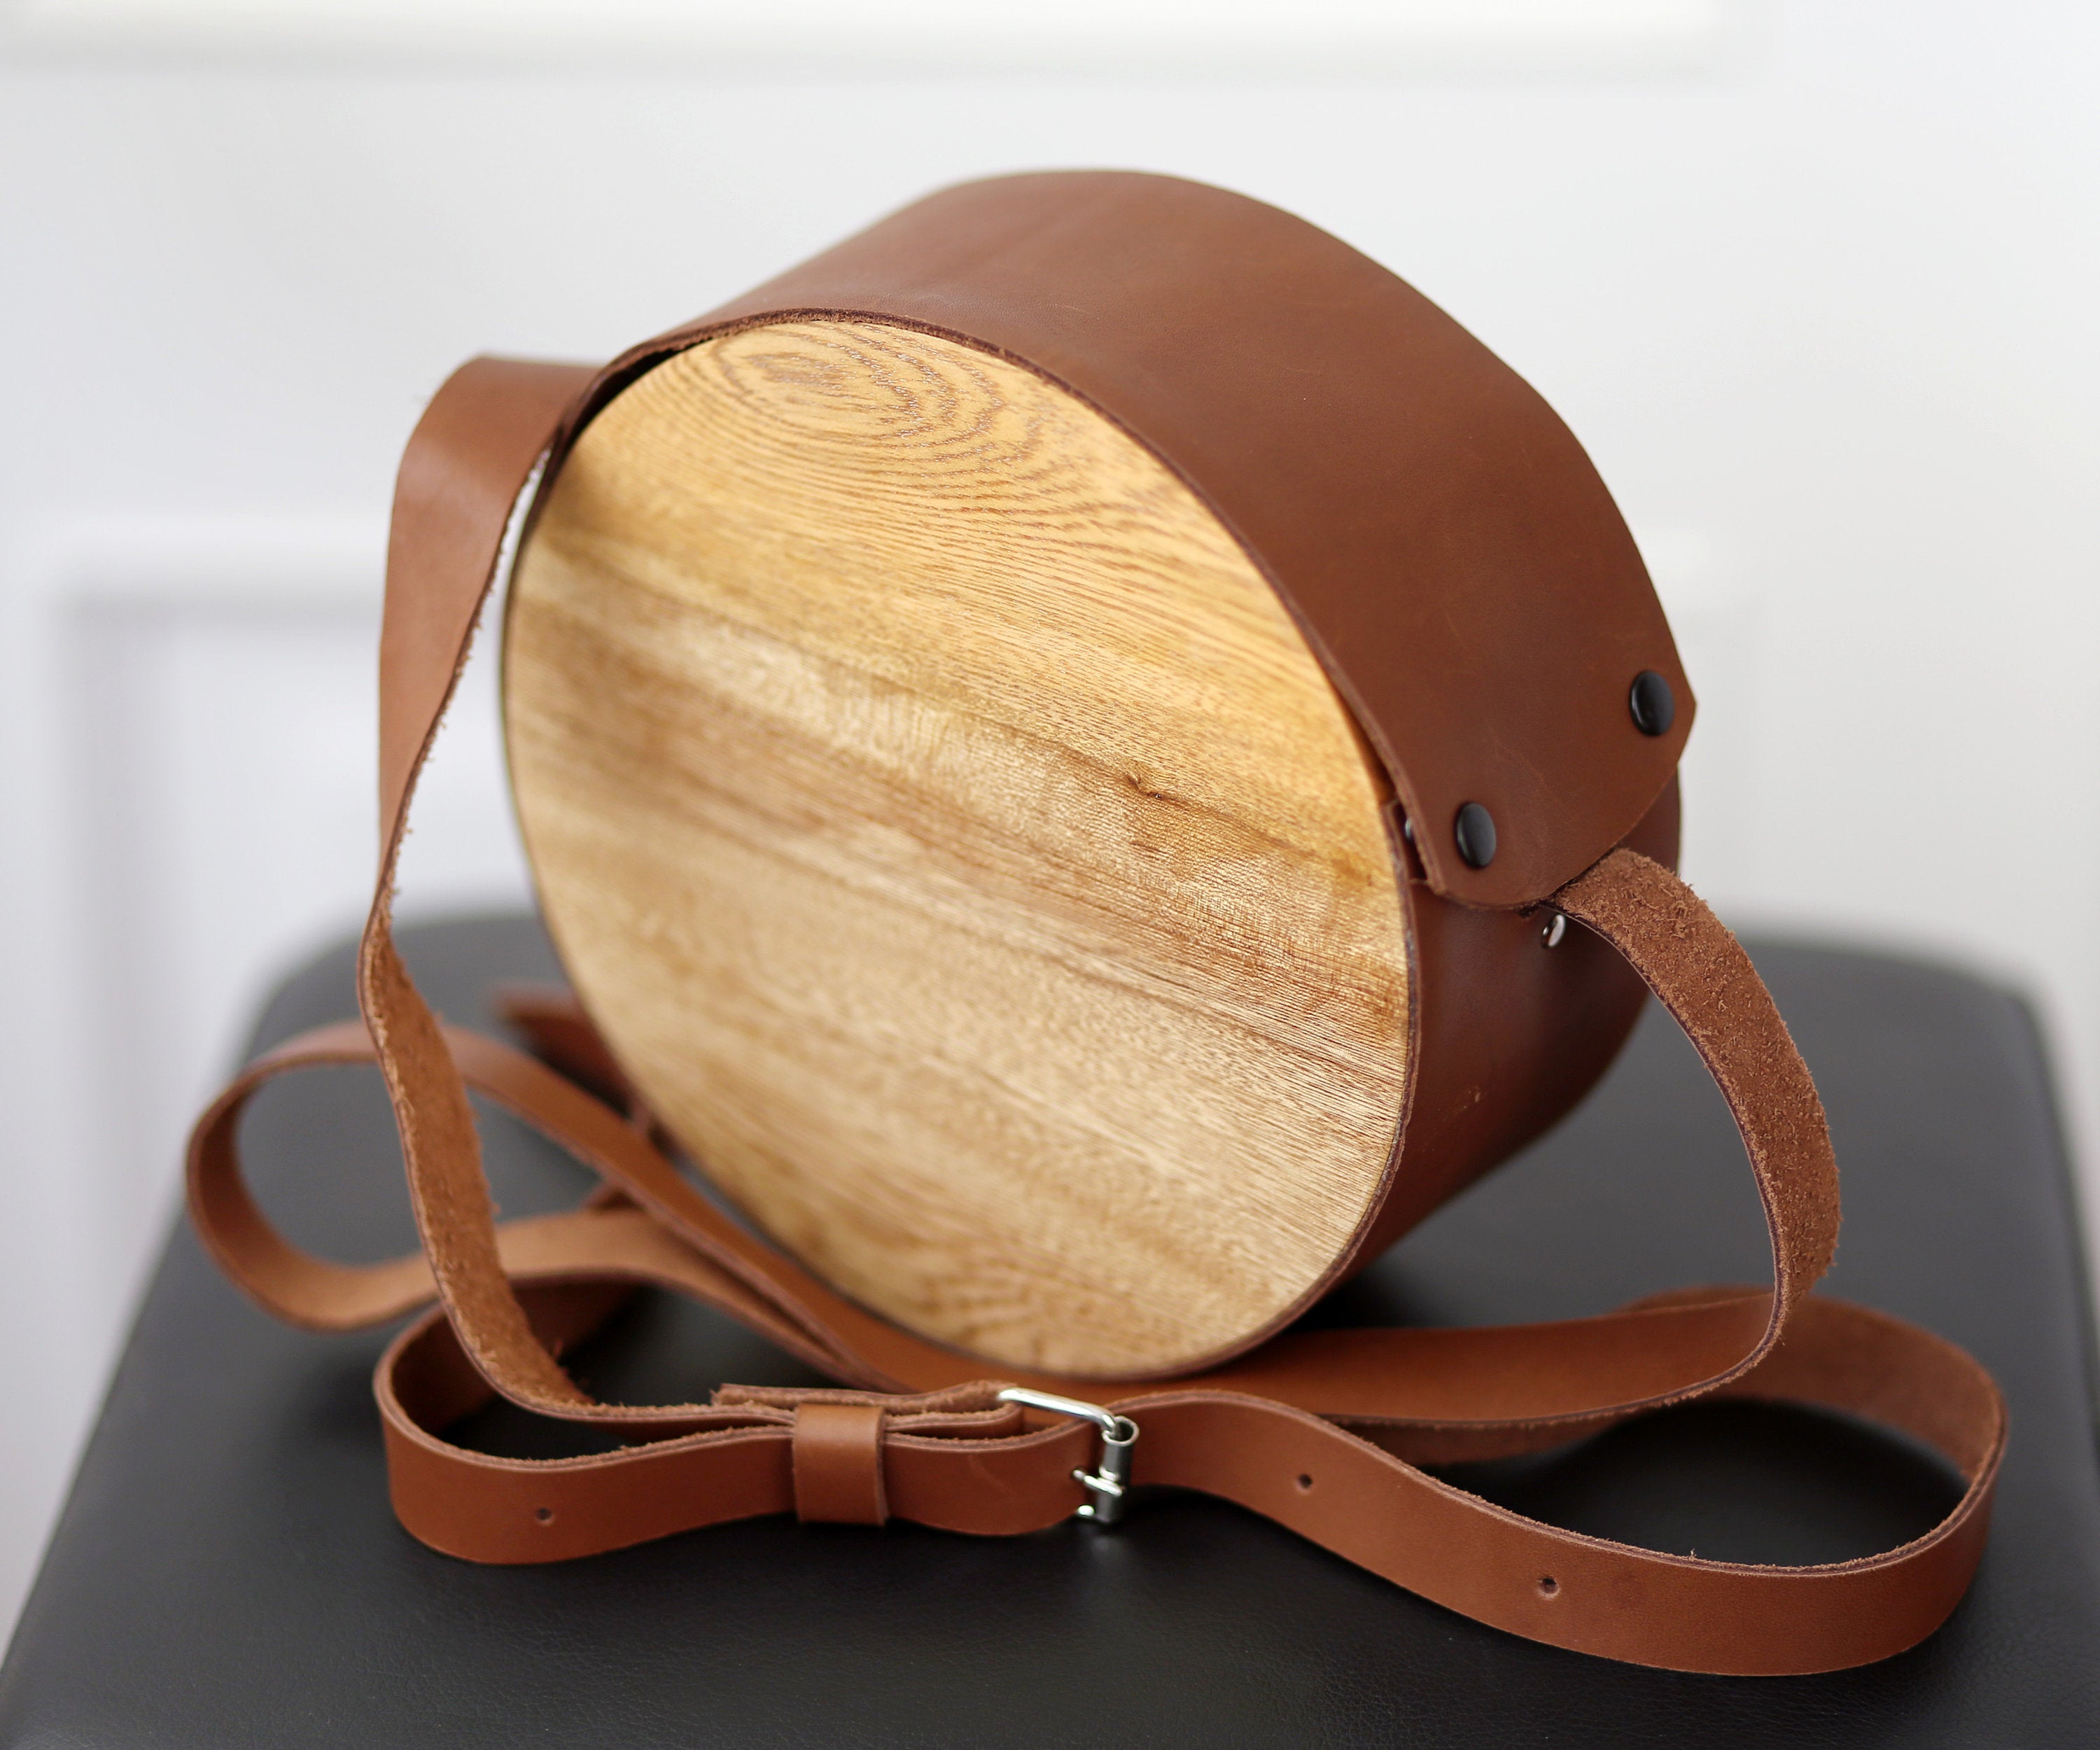 Round wooden bag or premium bag, Leather and anciente wood ethnic bag, Ethical fashion bag, Circle shoulder handbag